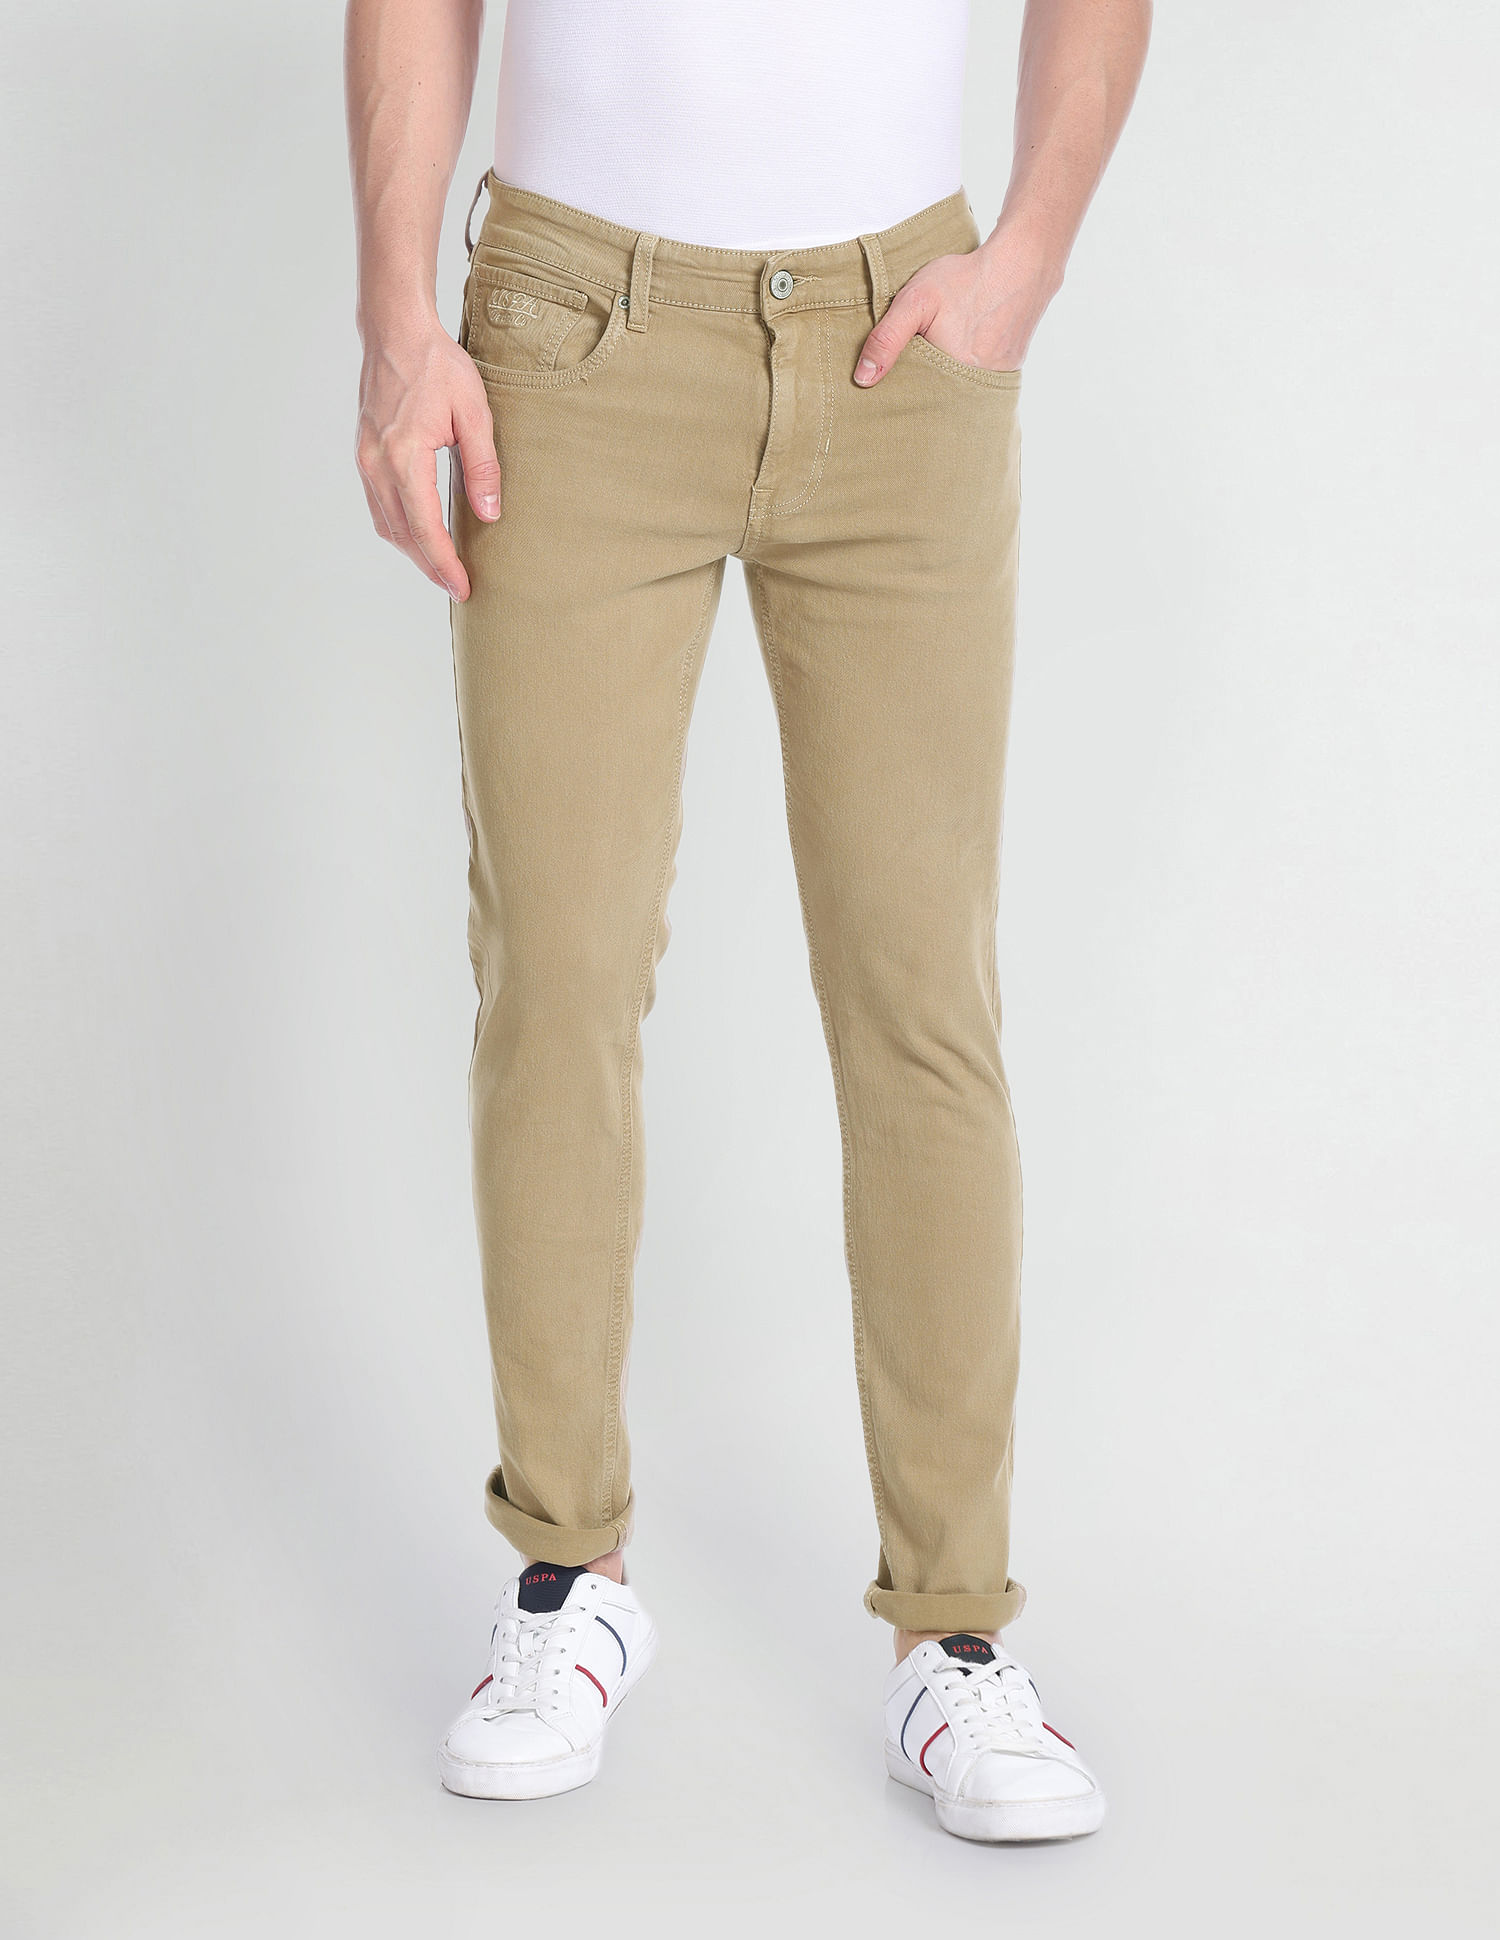 Mongoose Khaki Rinse Wash Clean Look Stretchable Denim | Smart casual  attire, Slim fit jeans, Khaki